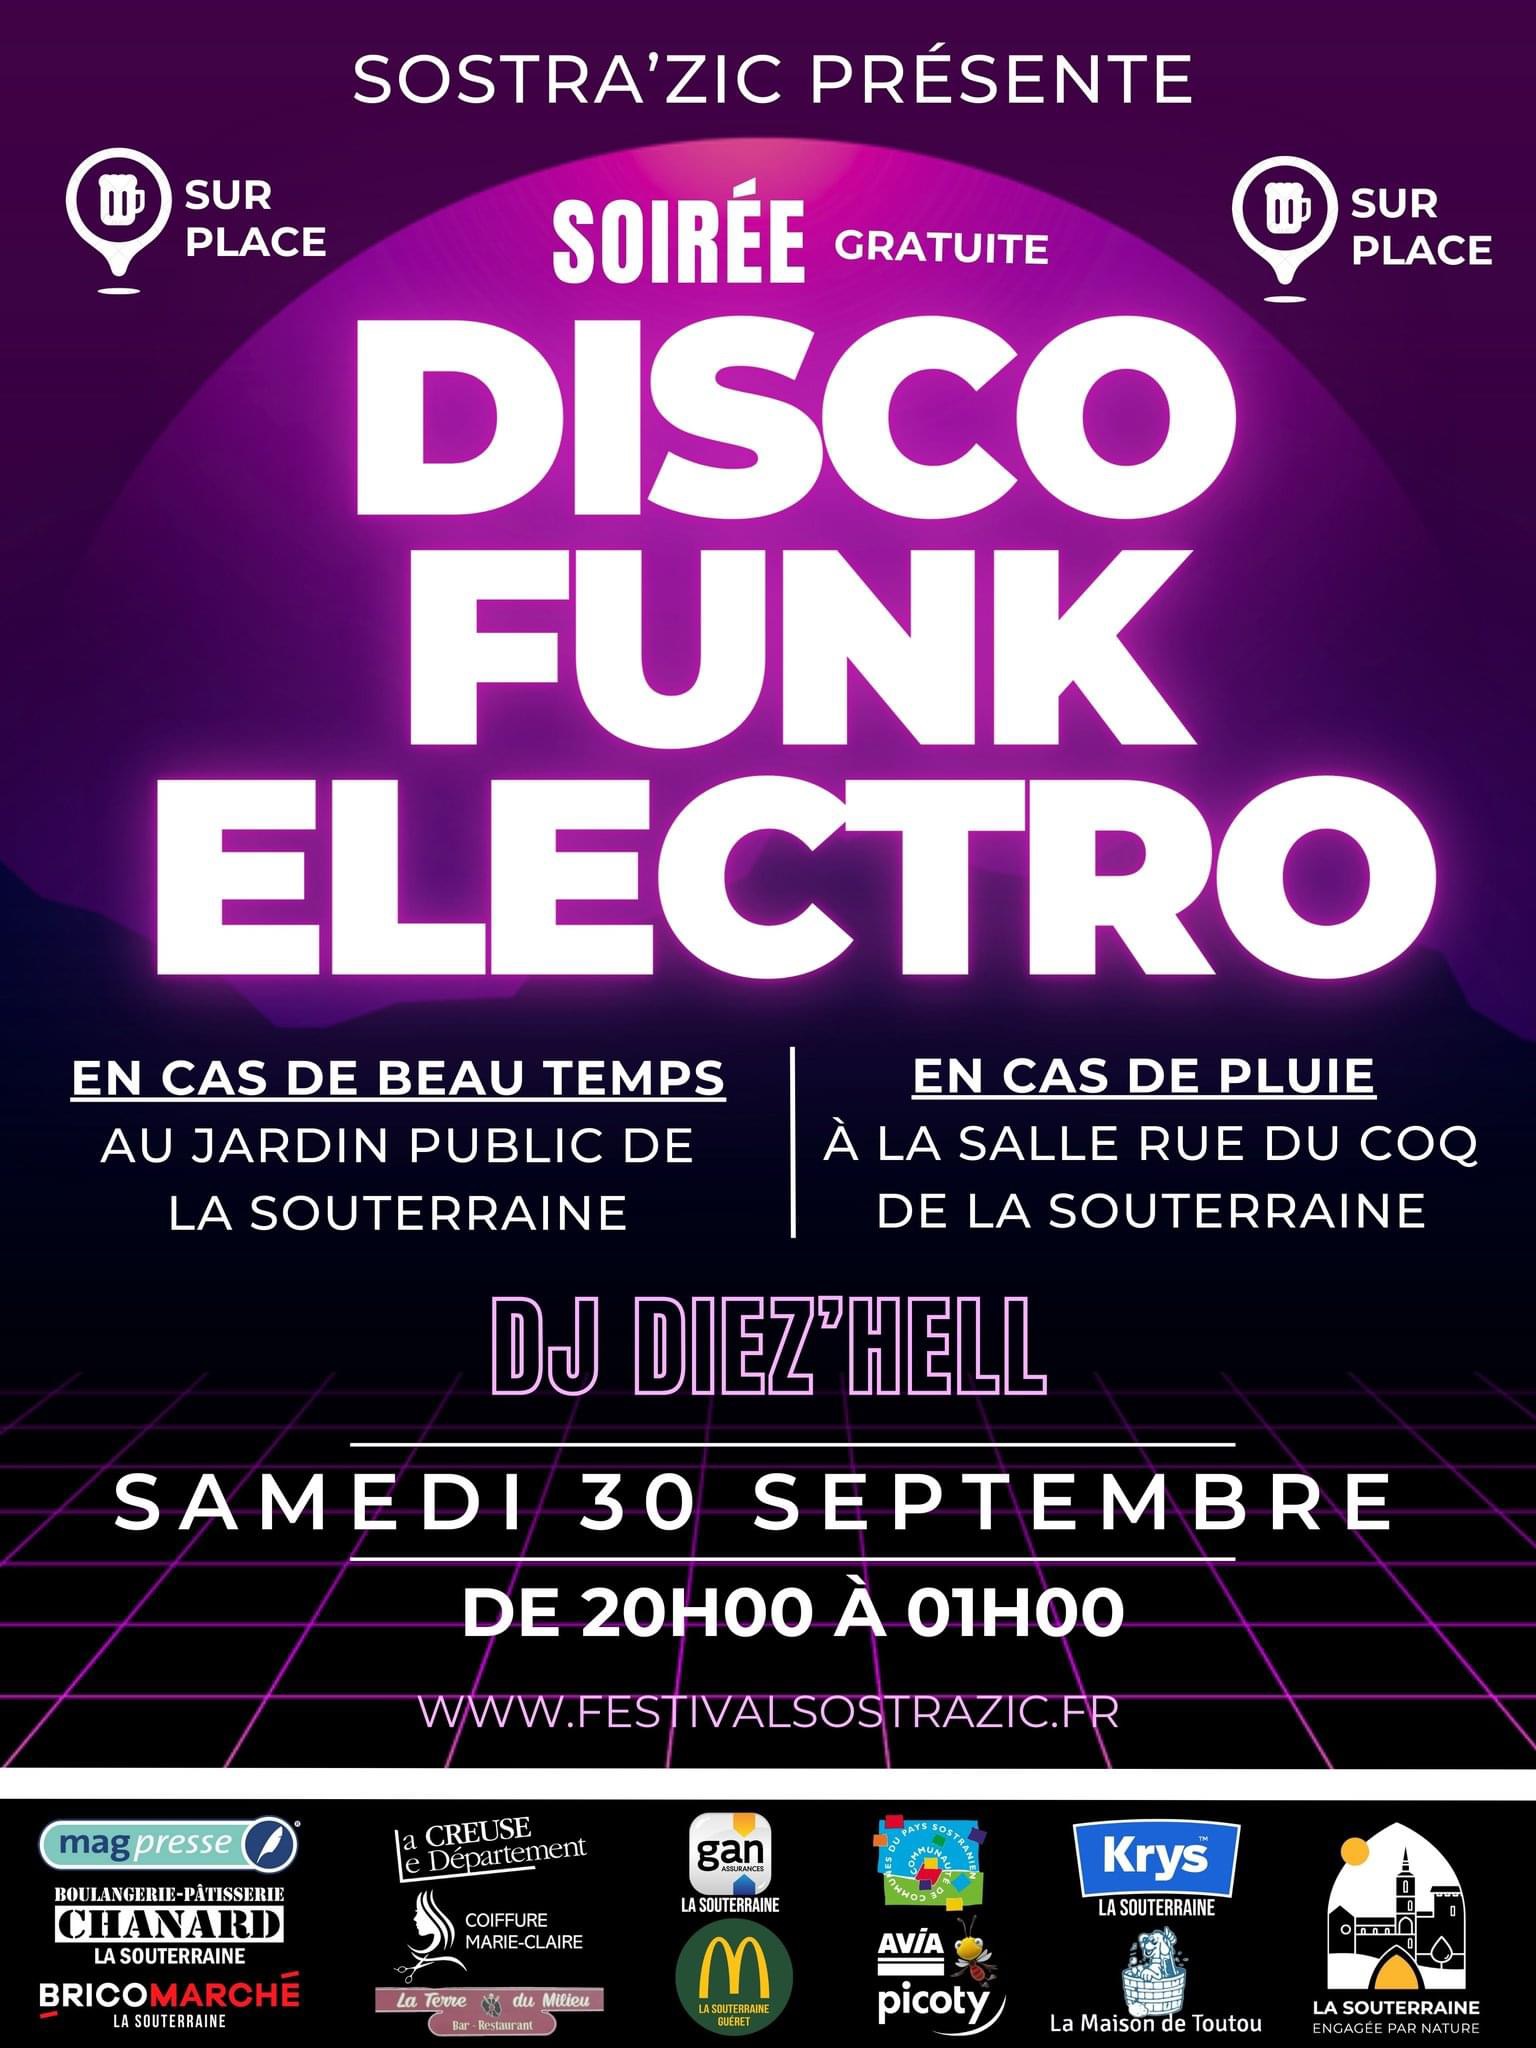 Soirée disco funk électro